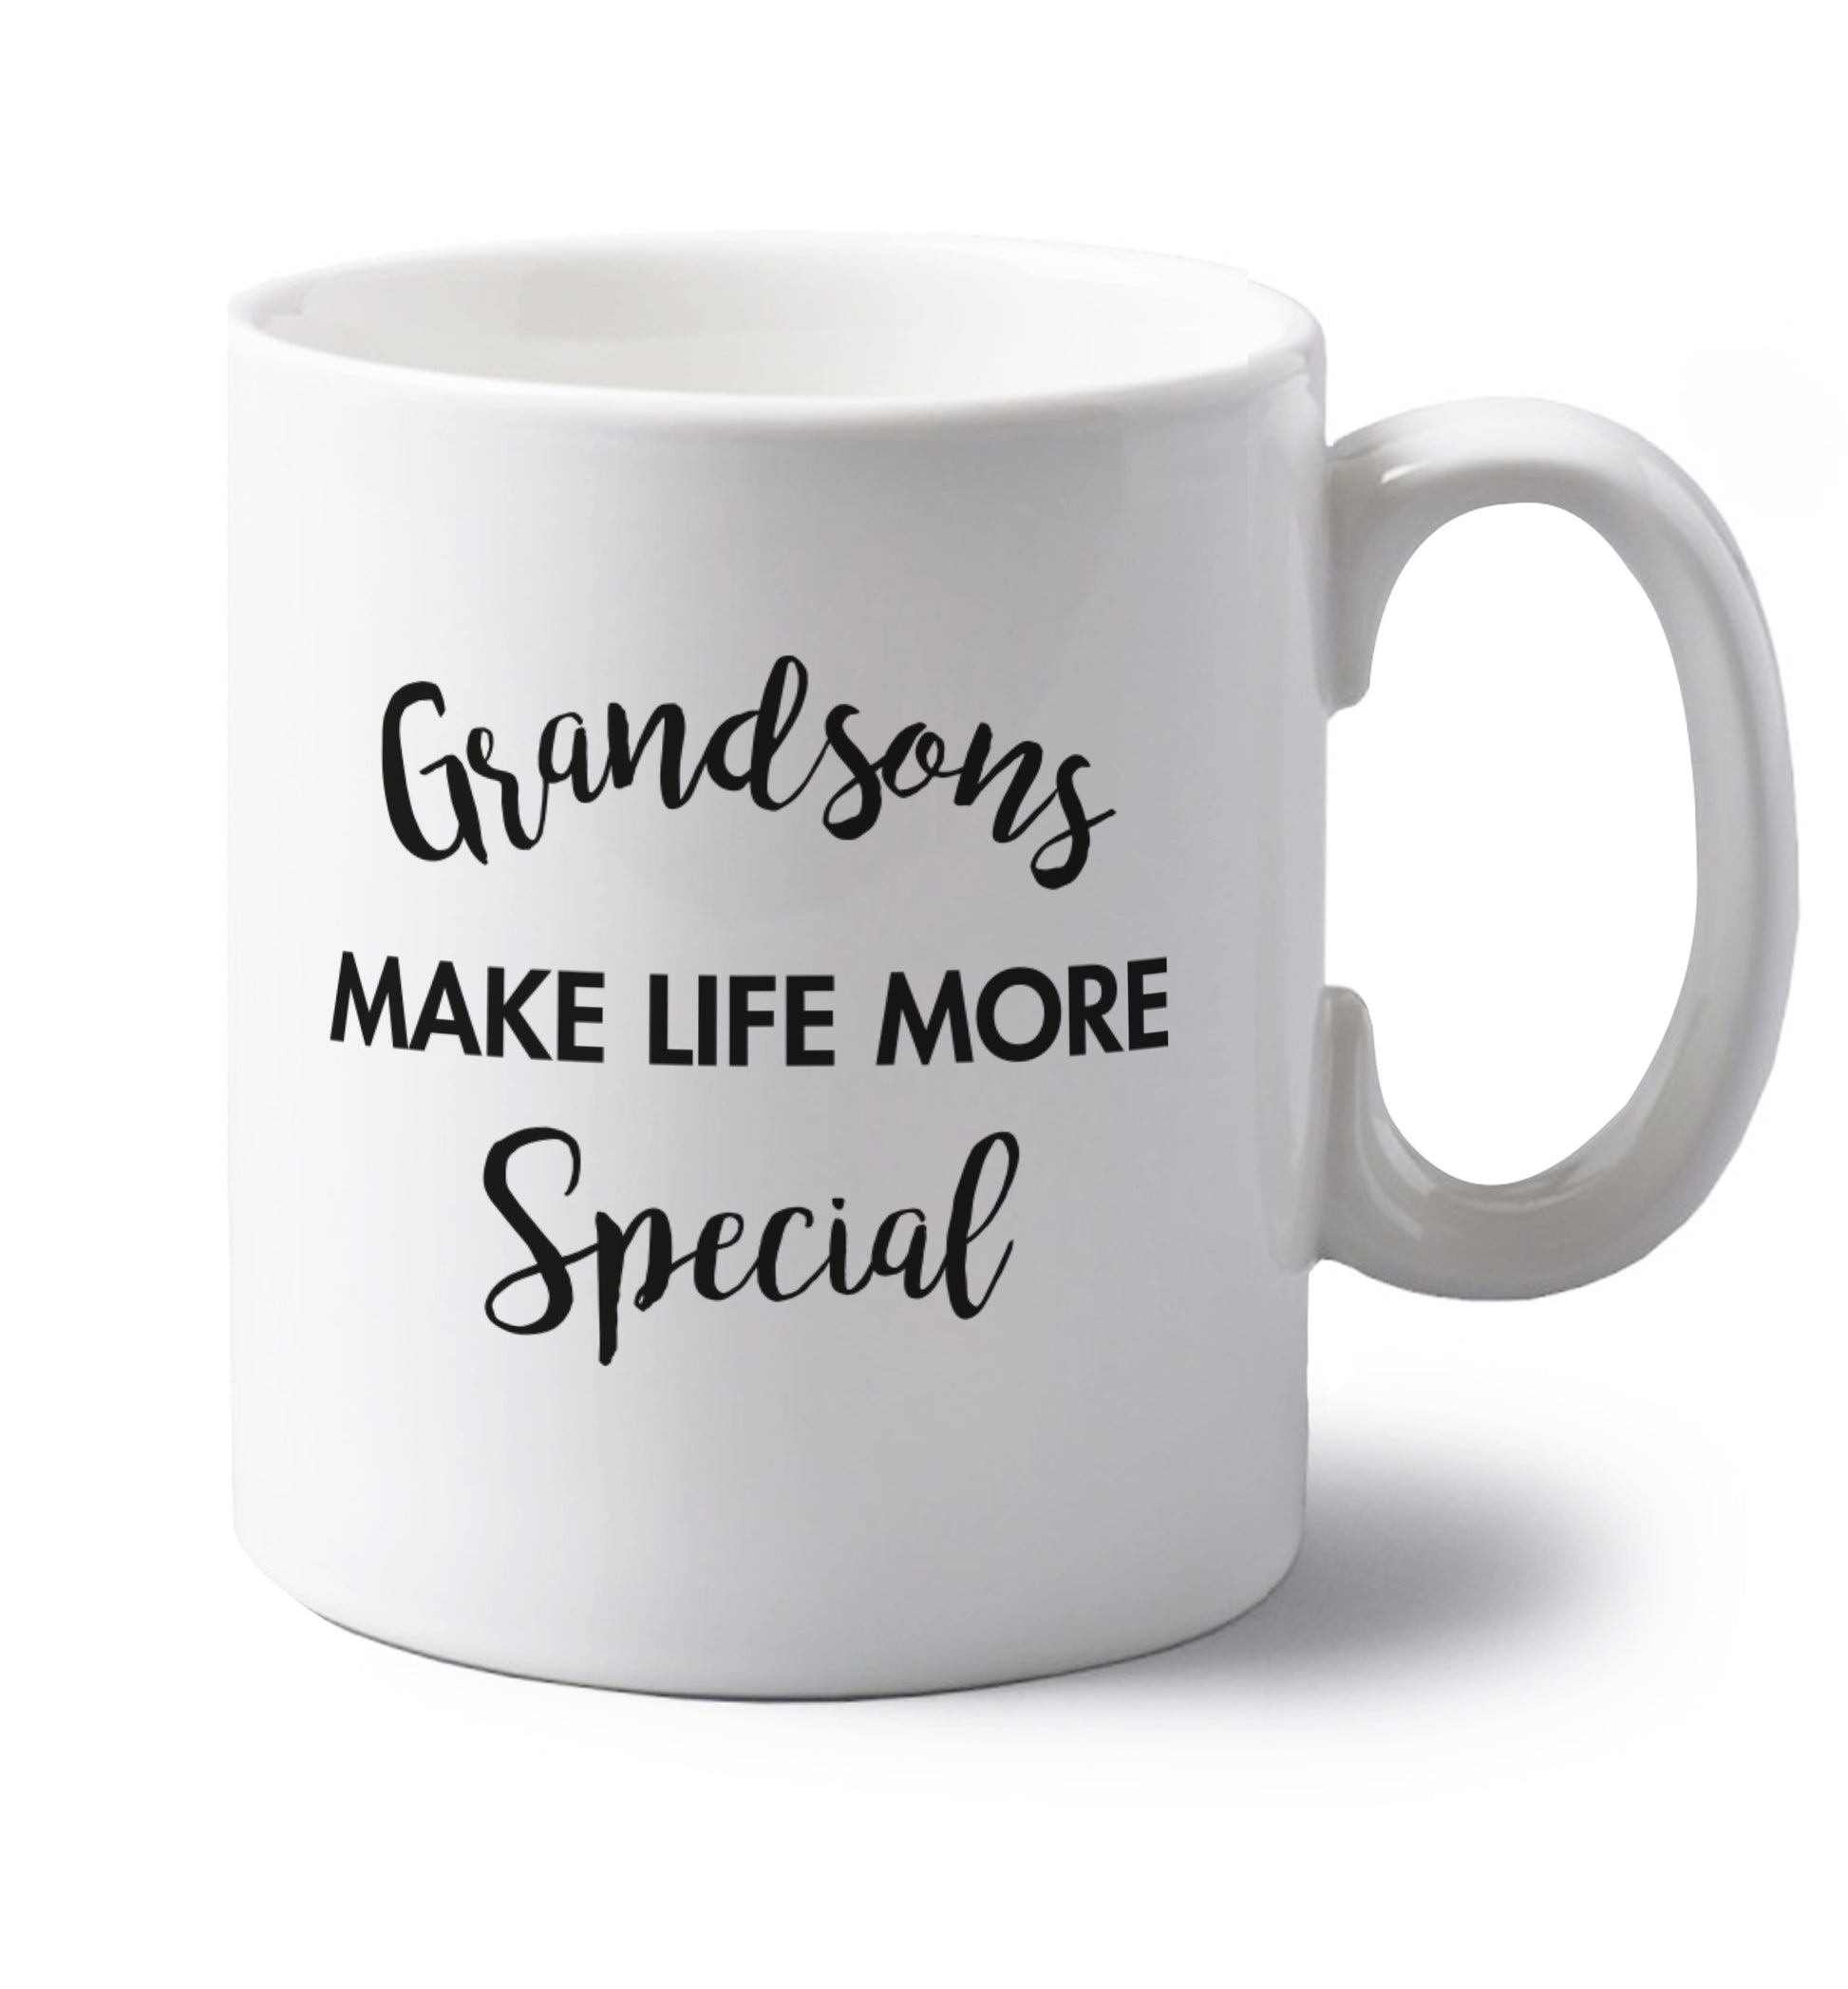 Grandsons make life more special left handed white ceramic mug 